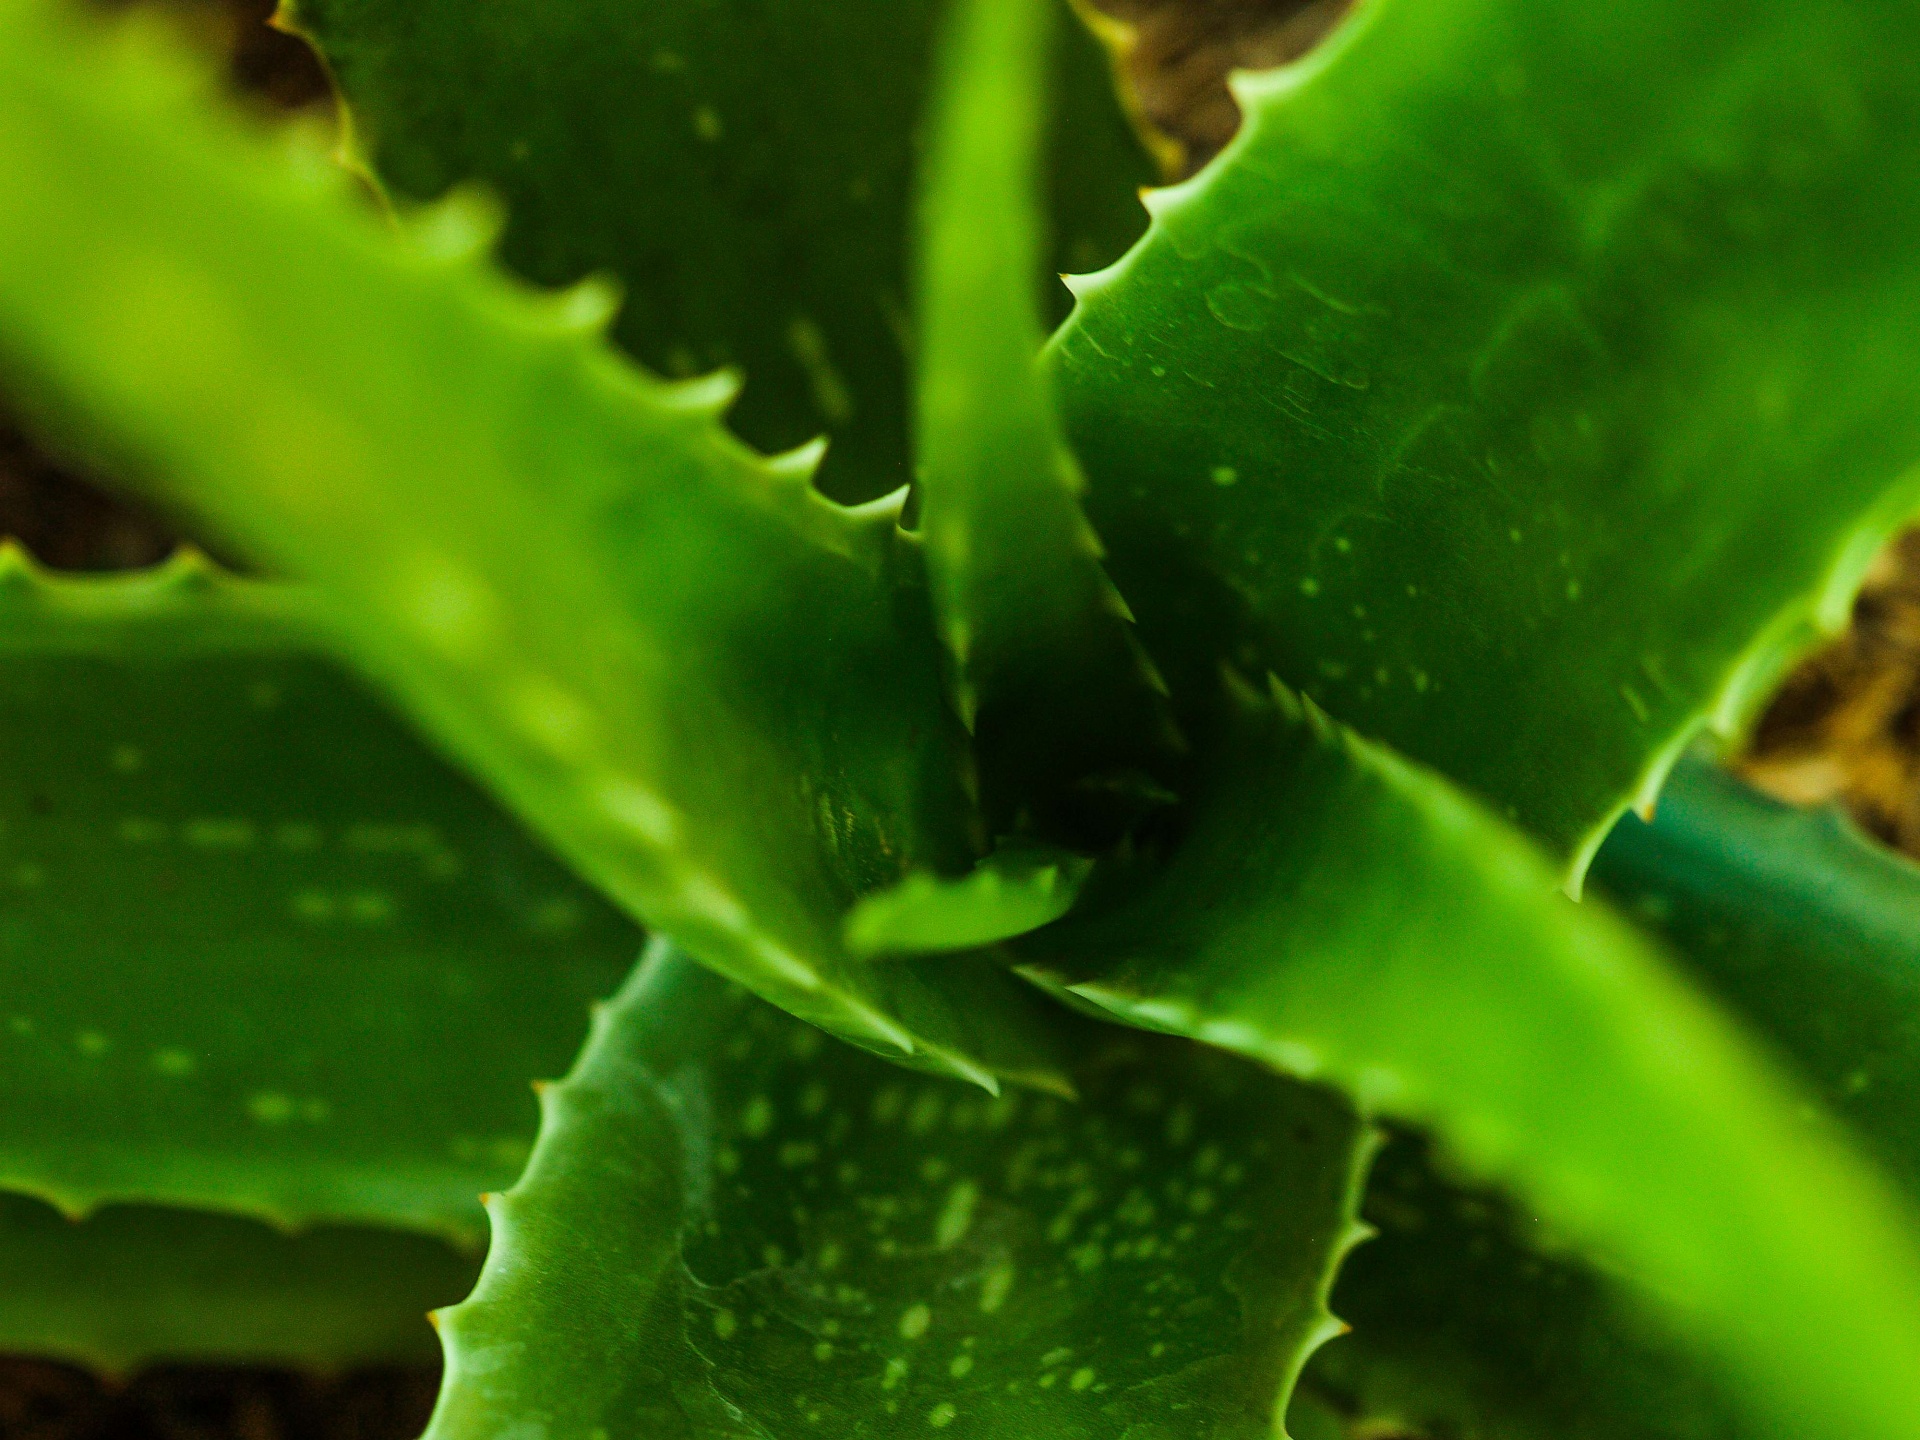 Green Aloe Vera Closeup